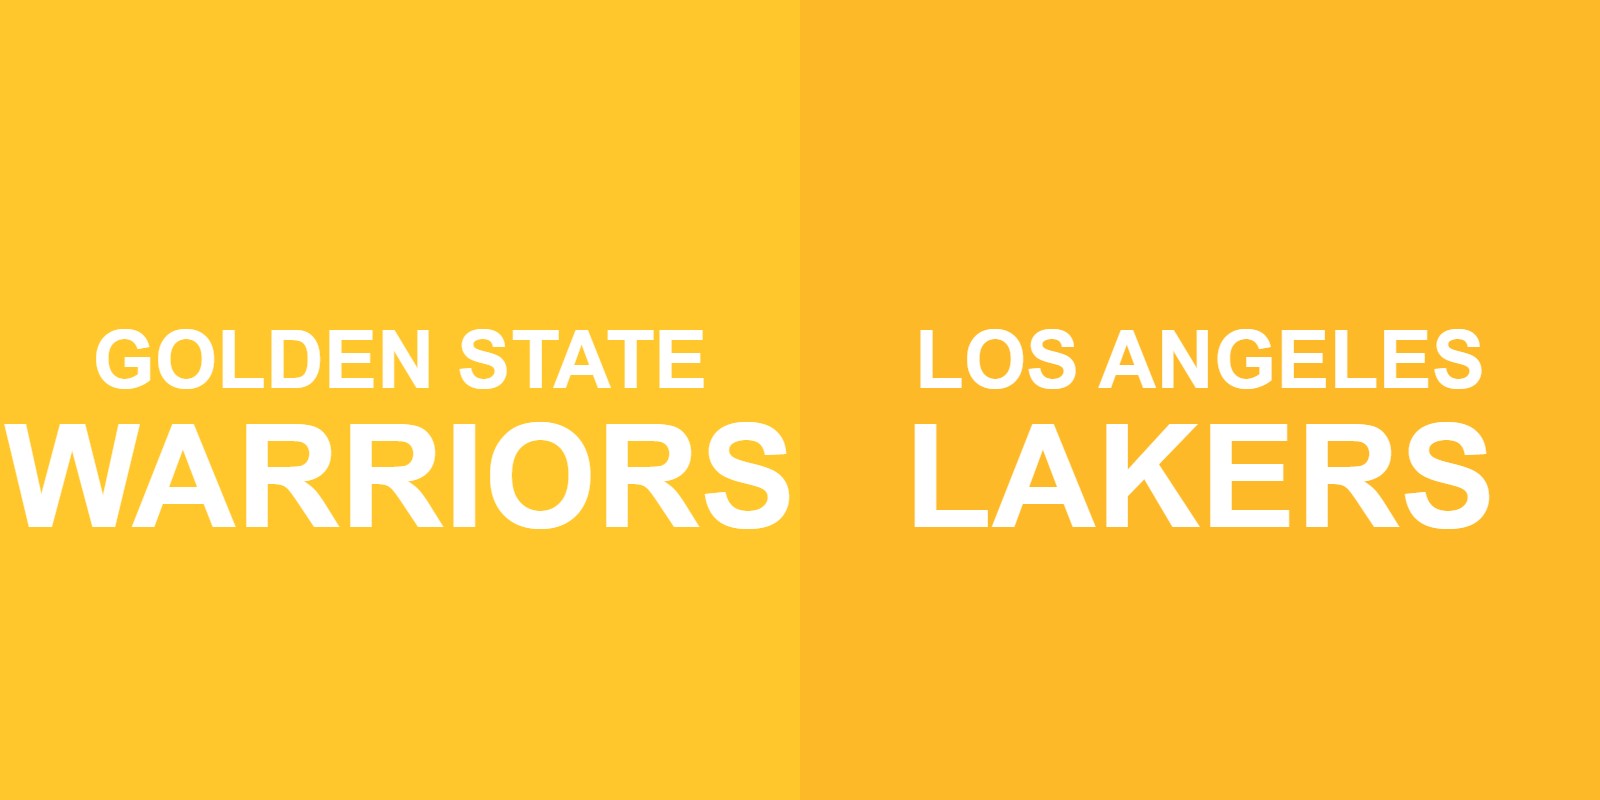 Warriors vs Lakers